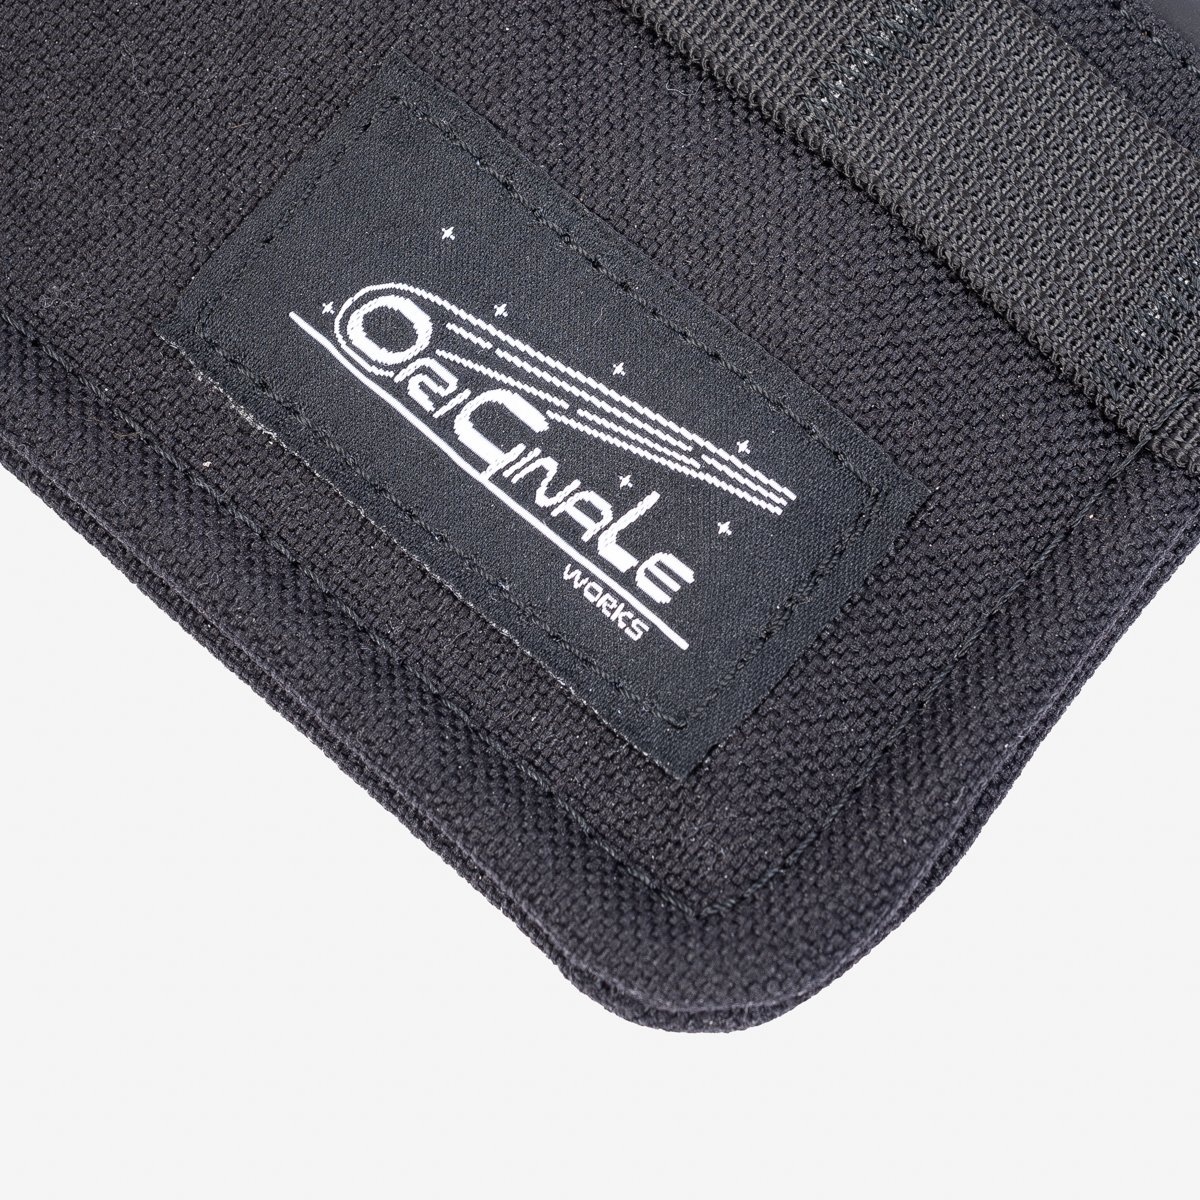 OGL-ORI-SH OGL Originale Tech Material Outdoor Short Wallet - Black - 6